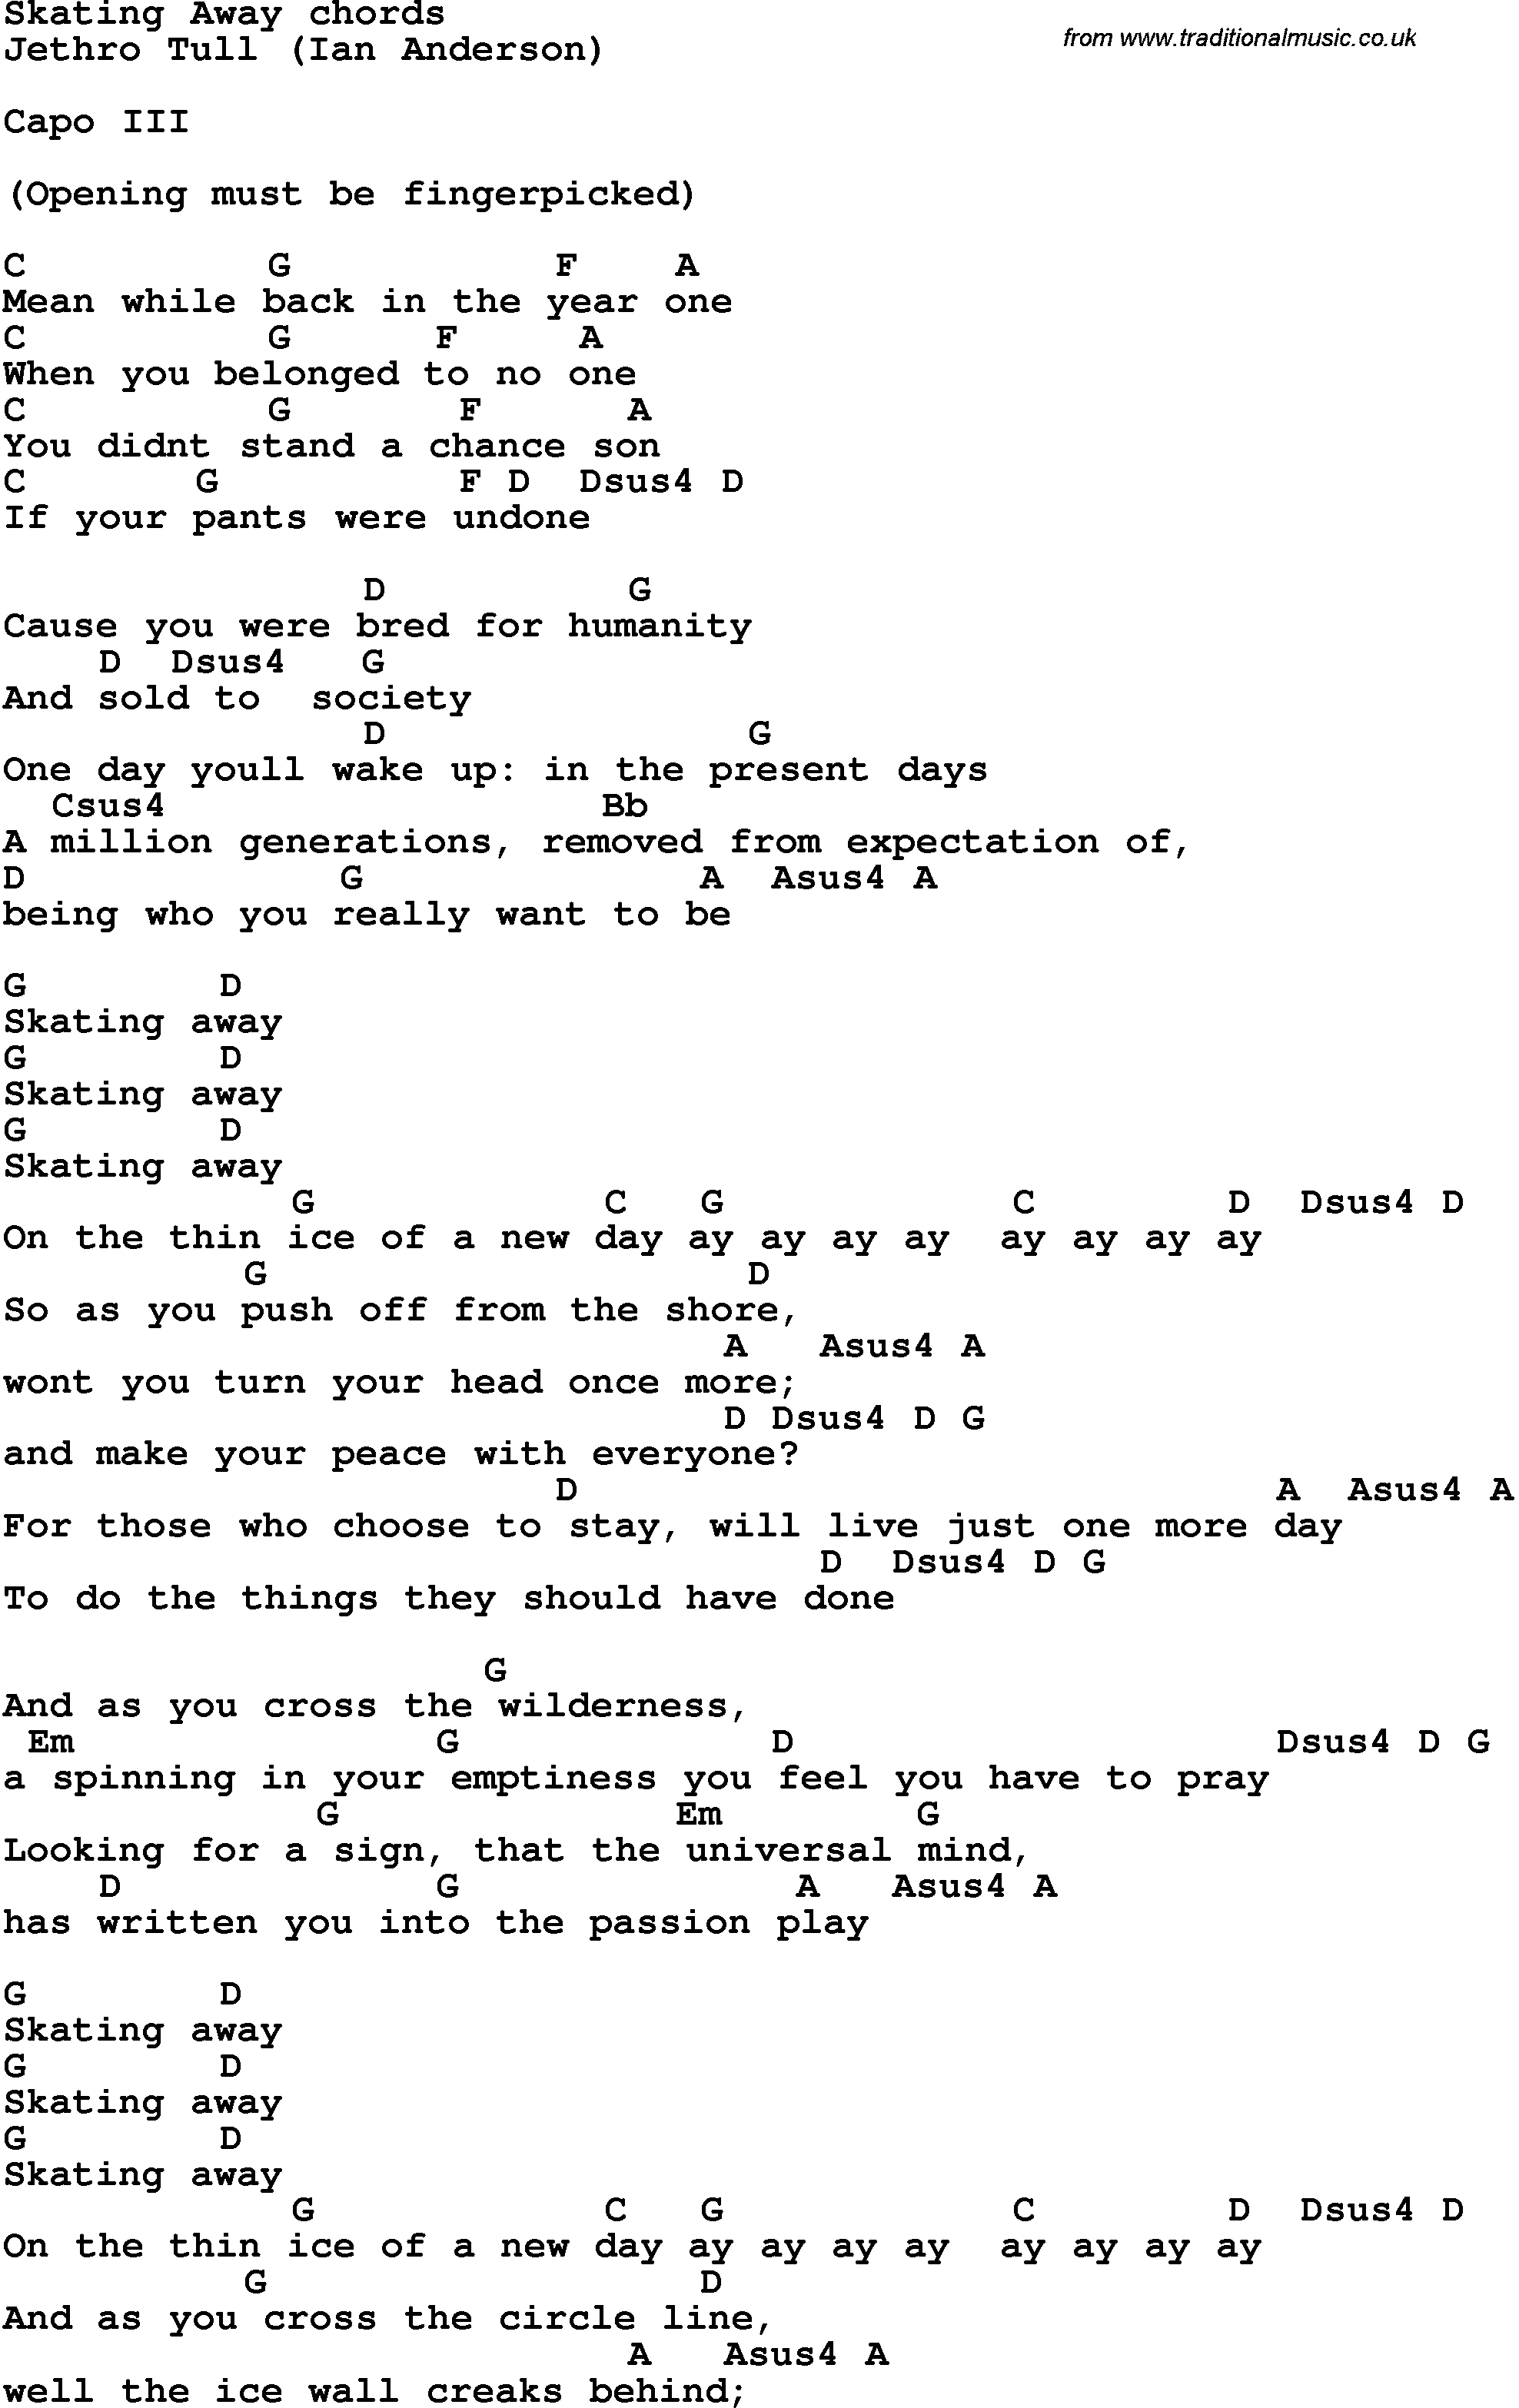 Song Lyrics with guitar chords for Skating Away